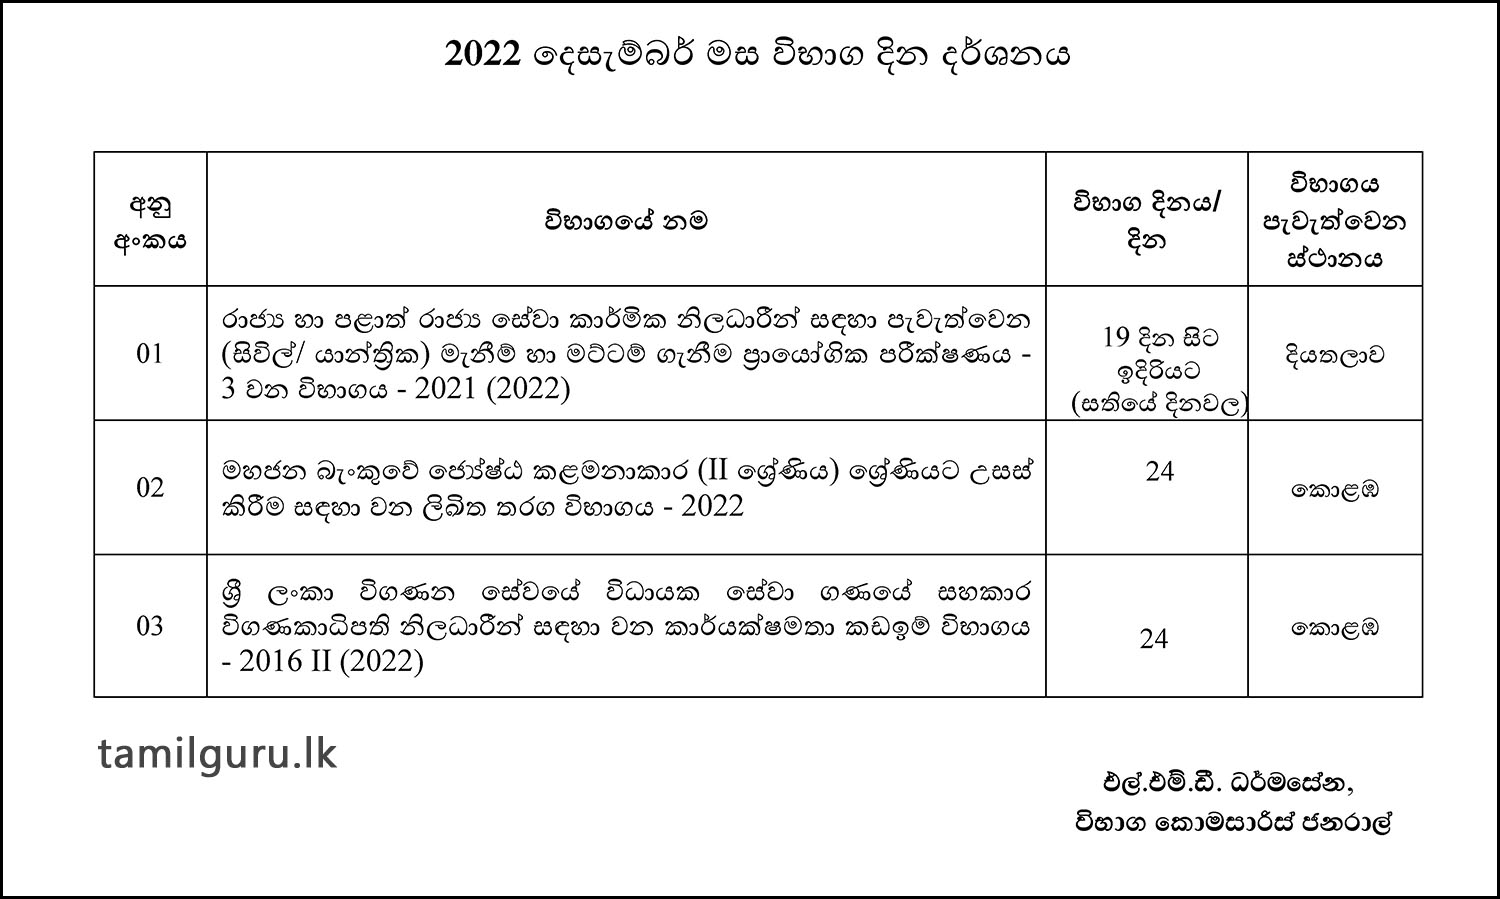 Examination Calendar for December 2022 - Department of Examinations